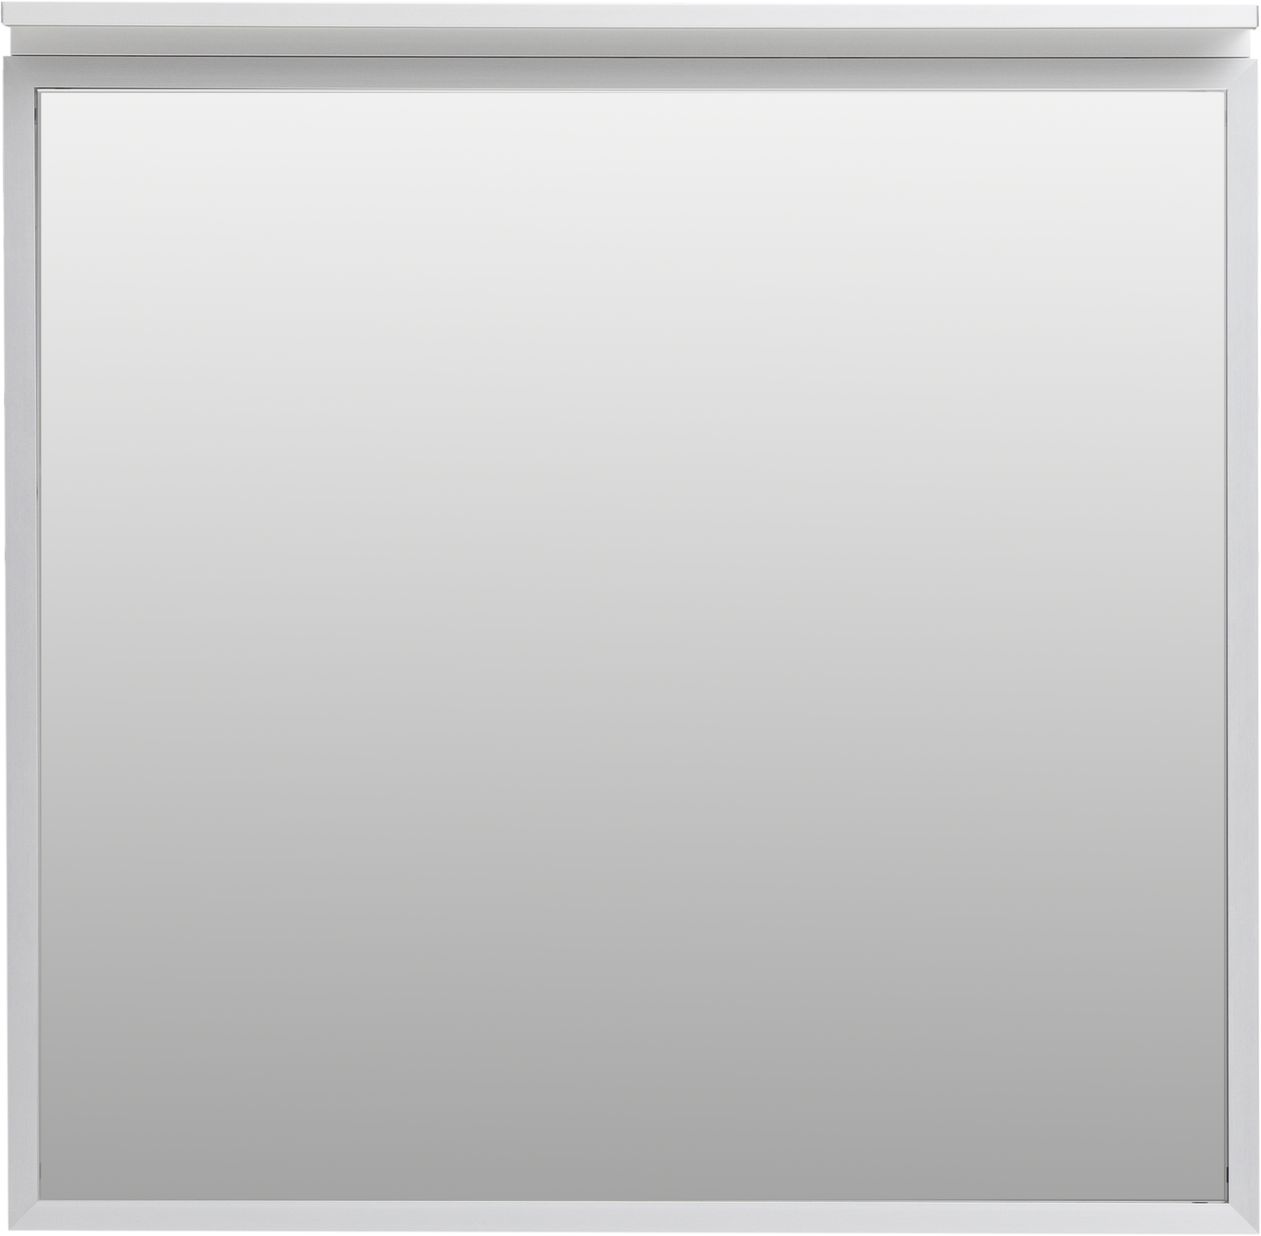 Зеркало Allen Brau Priority 80 см, серебро браш 1.31015.02